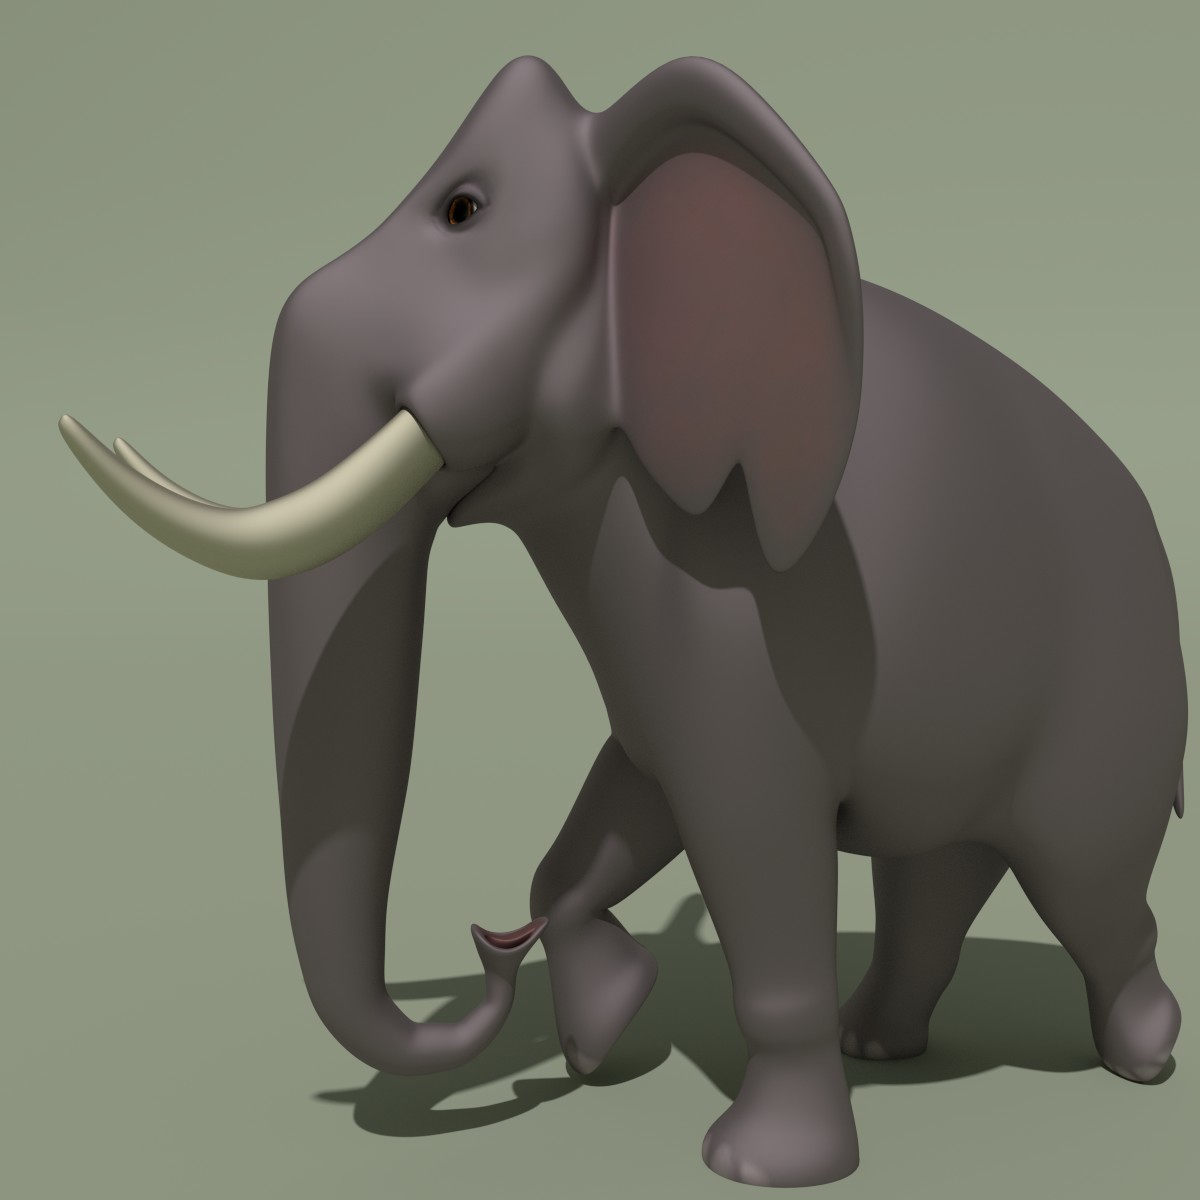 ArtStation - Animated Cartoon Elephant | Resources